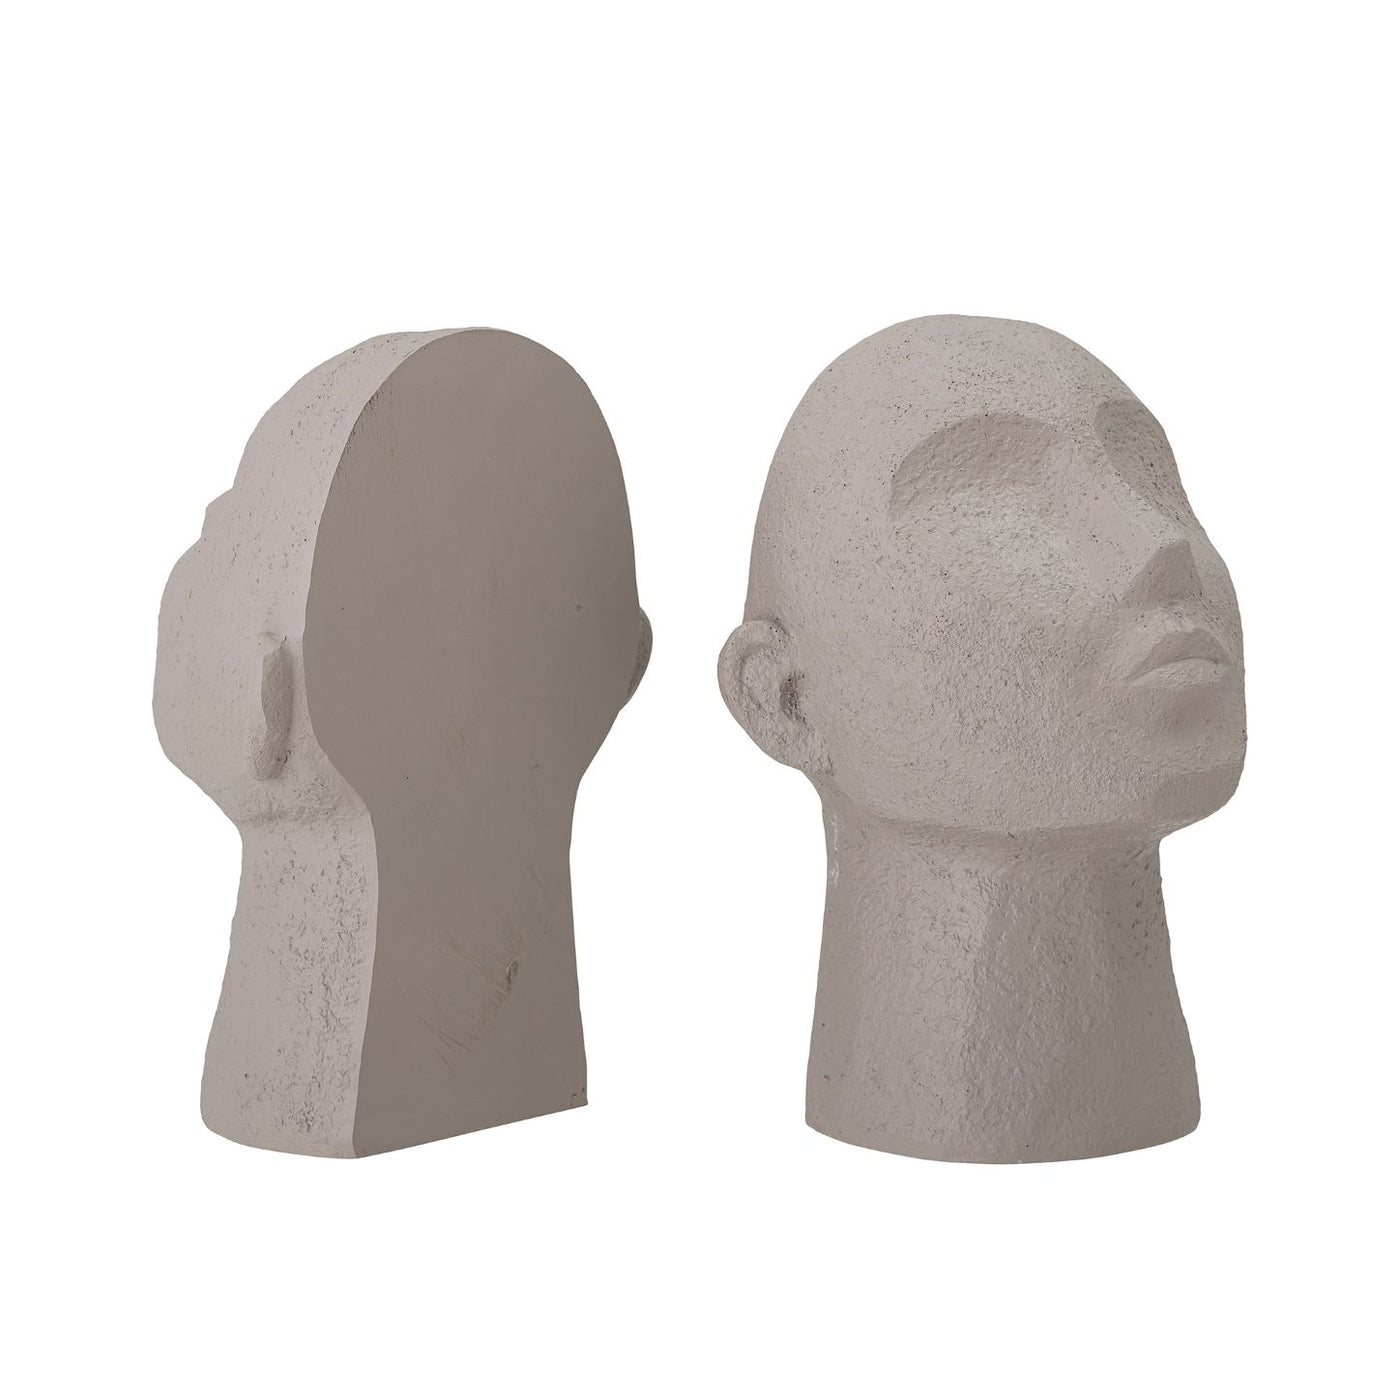 Sculptural Head Bookends